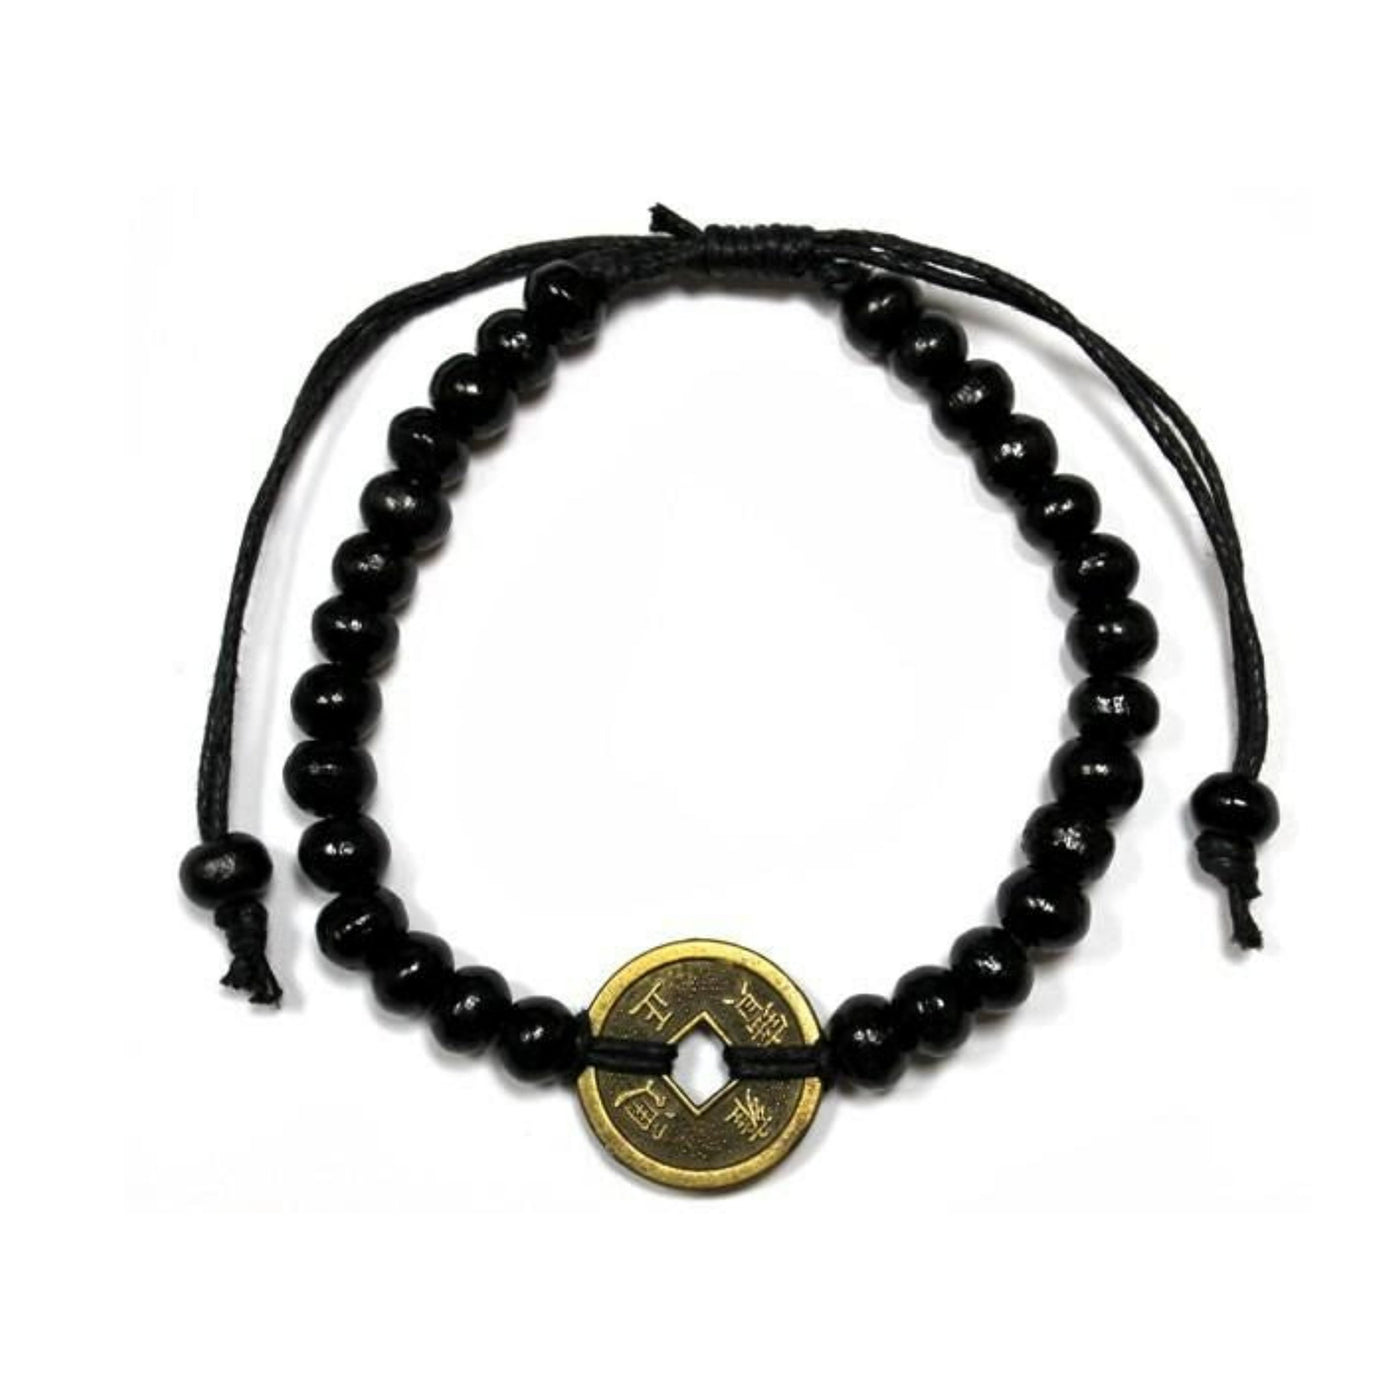 Unisex Black Good Luck Coin Of Fortune Feng-Shui Bracelets.